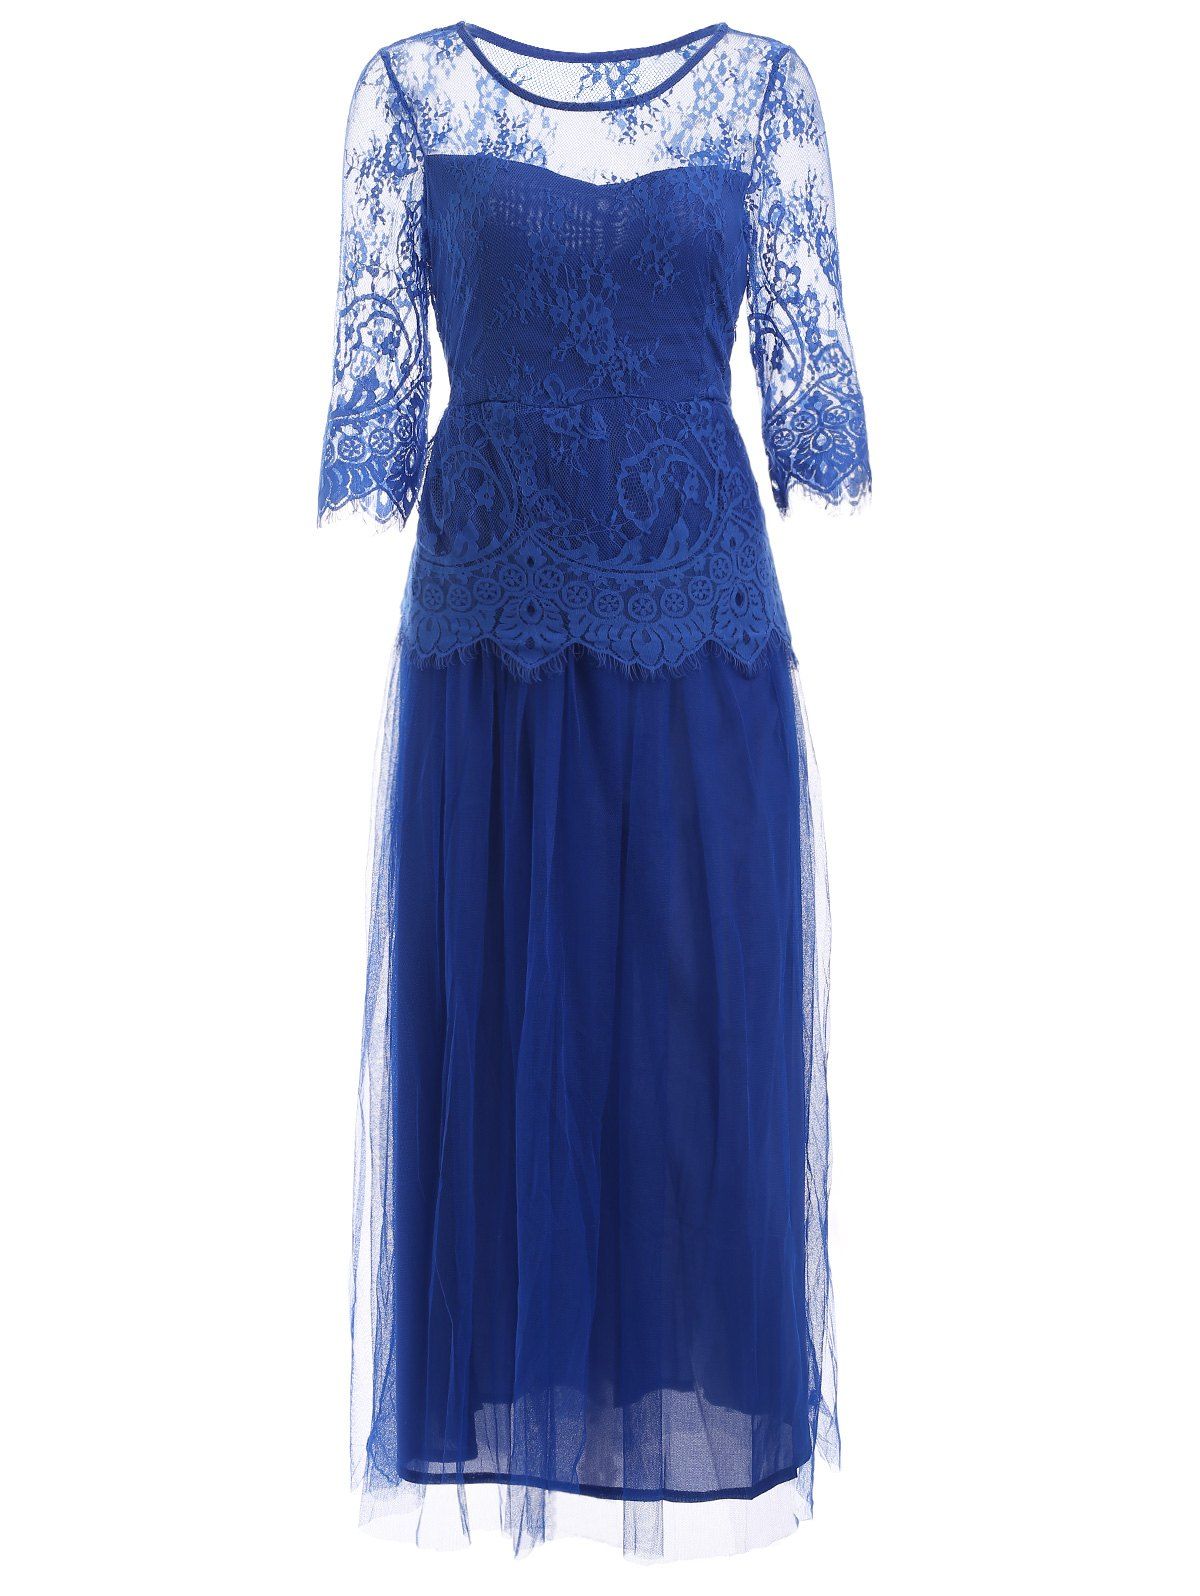 [38% OFF] Lace Panel Long Prom Wedding Guest Tea Length Dress | Rosegal